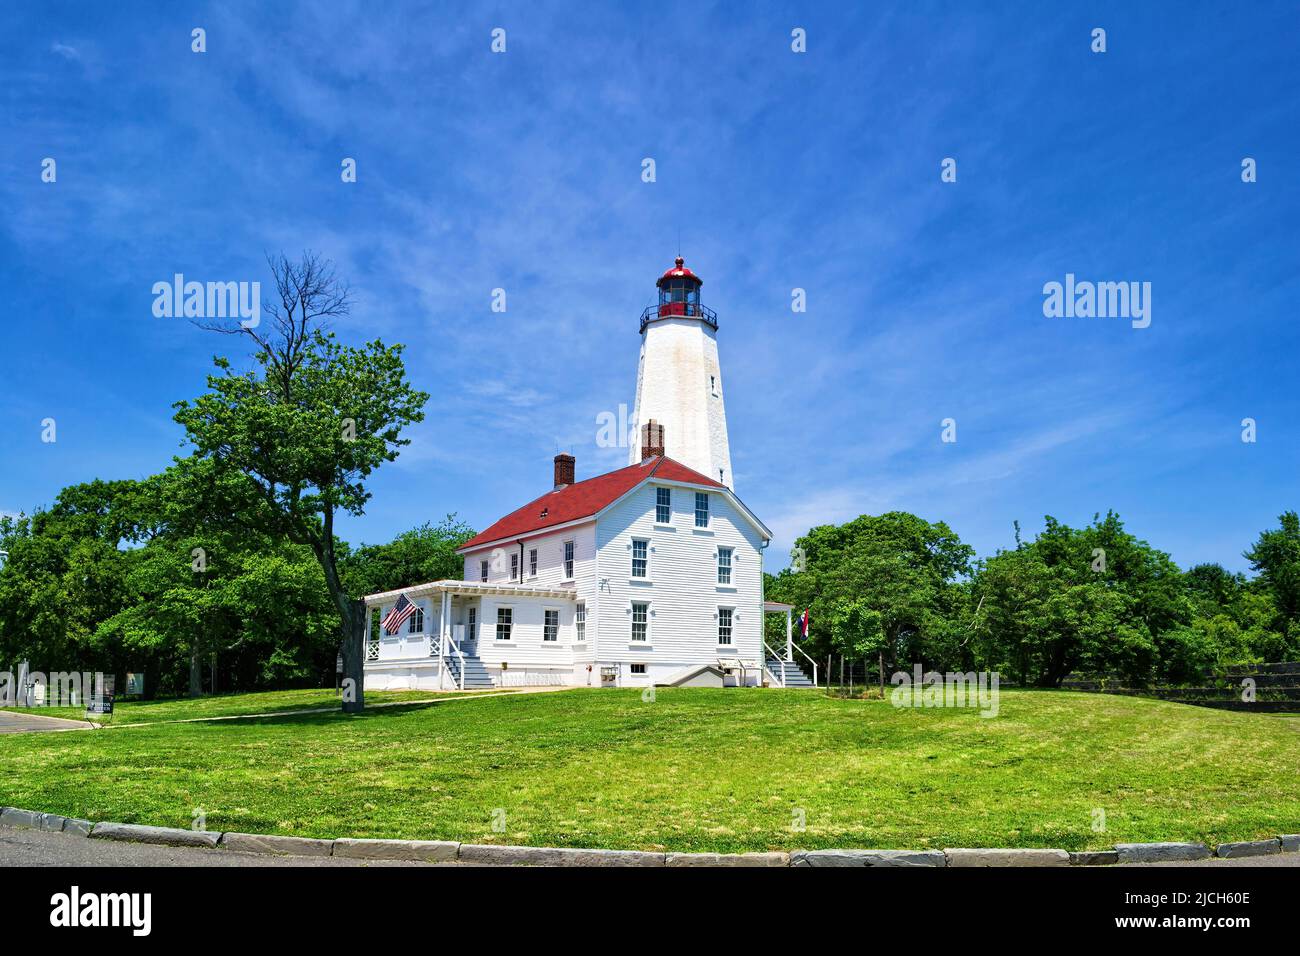 Sandy Hook Lighthouse Turm und Hausgebäude. Sandy Hook liegt in Highlands im Monmouth County in New Jersey, USA. Stockfoto